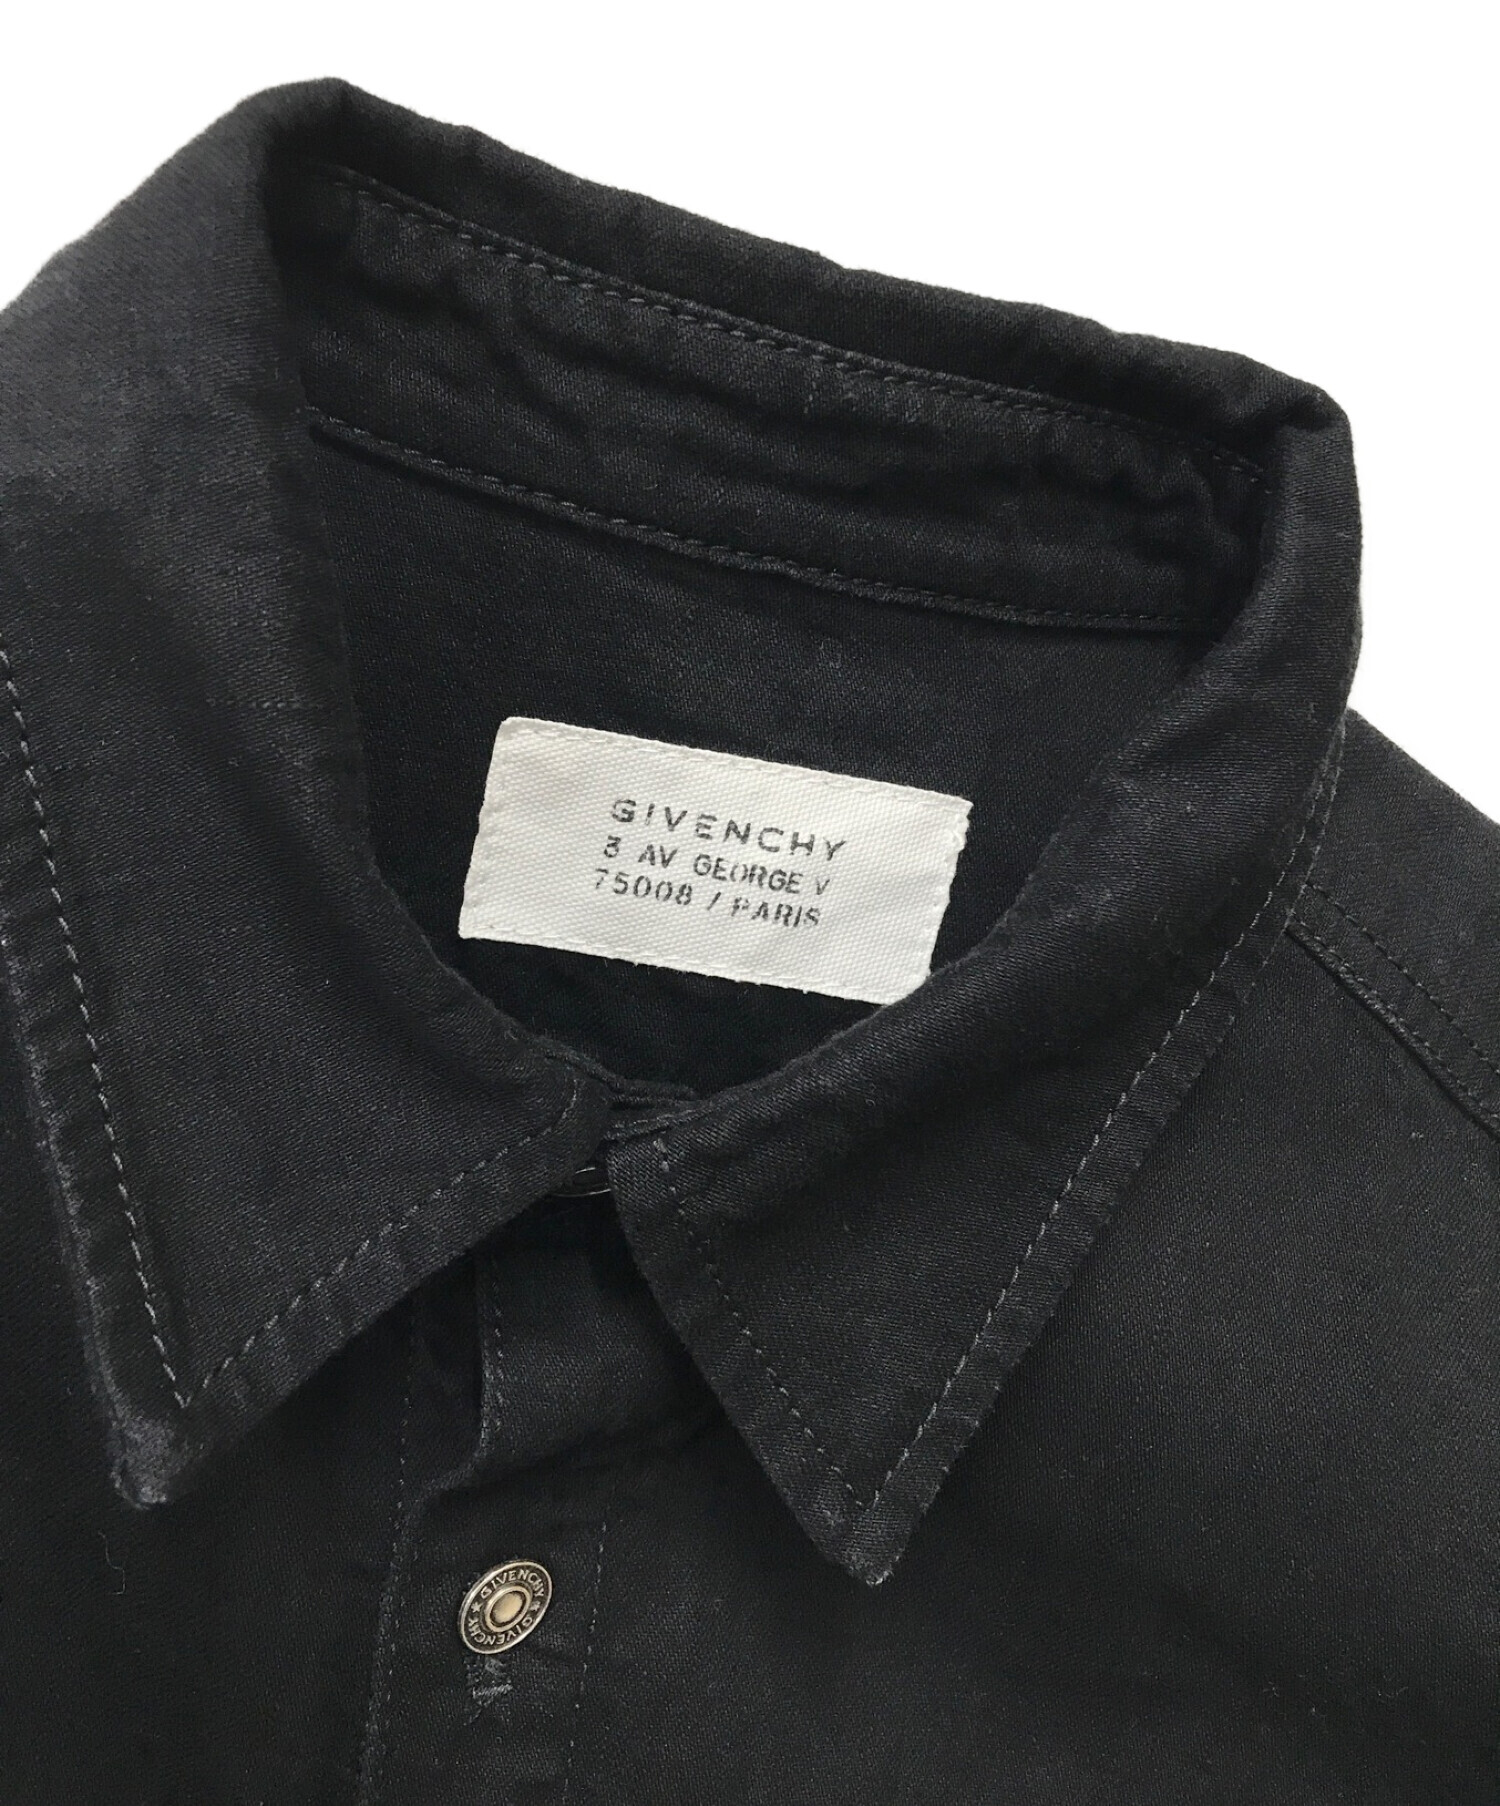 GIVENCHY (ジバンシィ) レインボーシグネチャメタルボタンコットンシャツ ブラック サイズ:Ｌ